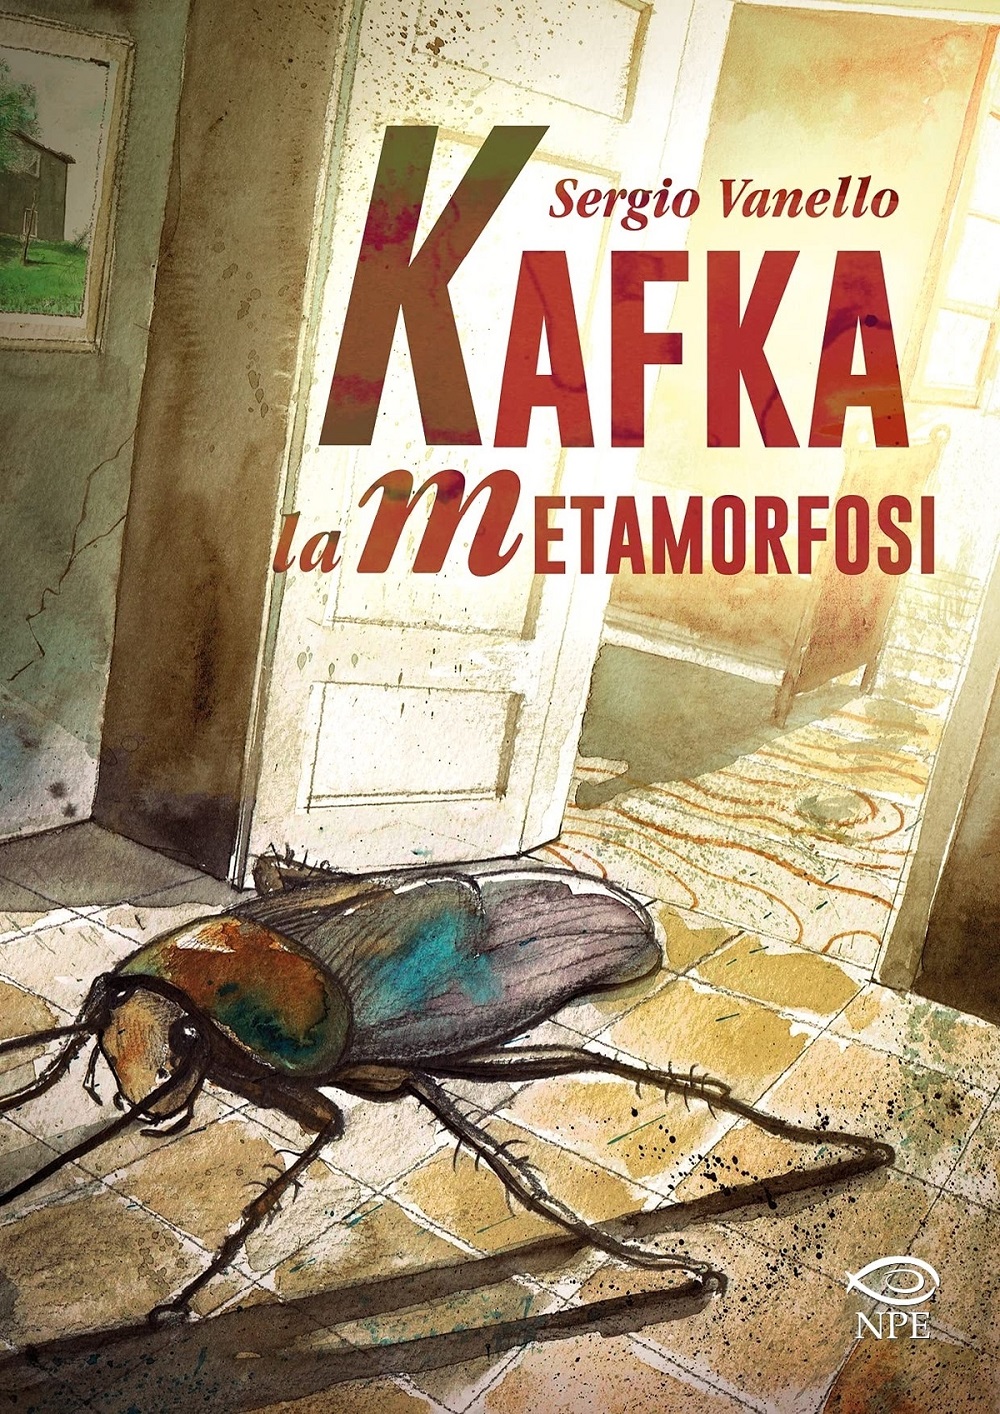 Sergio Vanello – Kafka. La metamorfosi (Edizioni NPE, Battipaglia 2021)